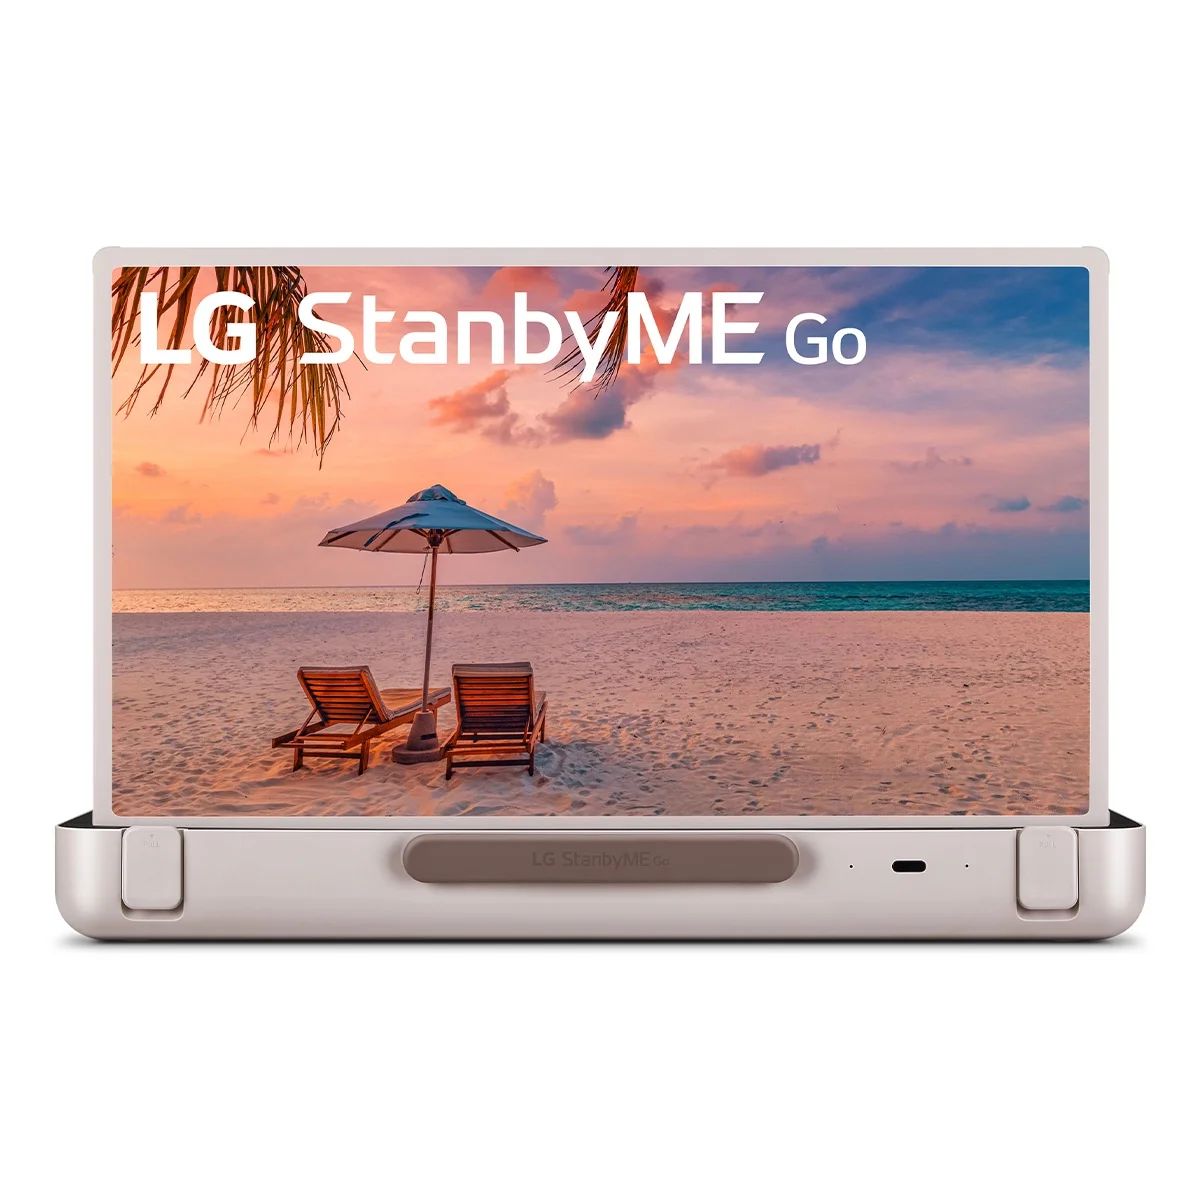 LG StandbyME Go 27" Full HD HDR Smart LED Portable Briefcase TV | Walmart (US)